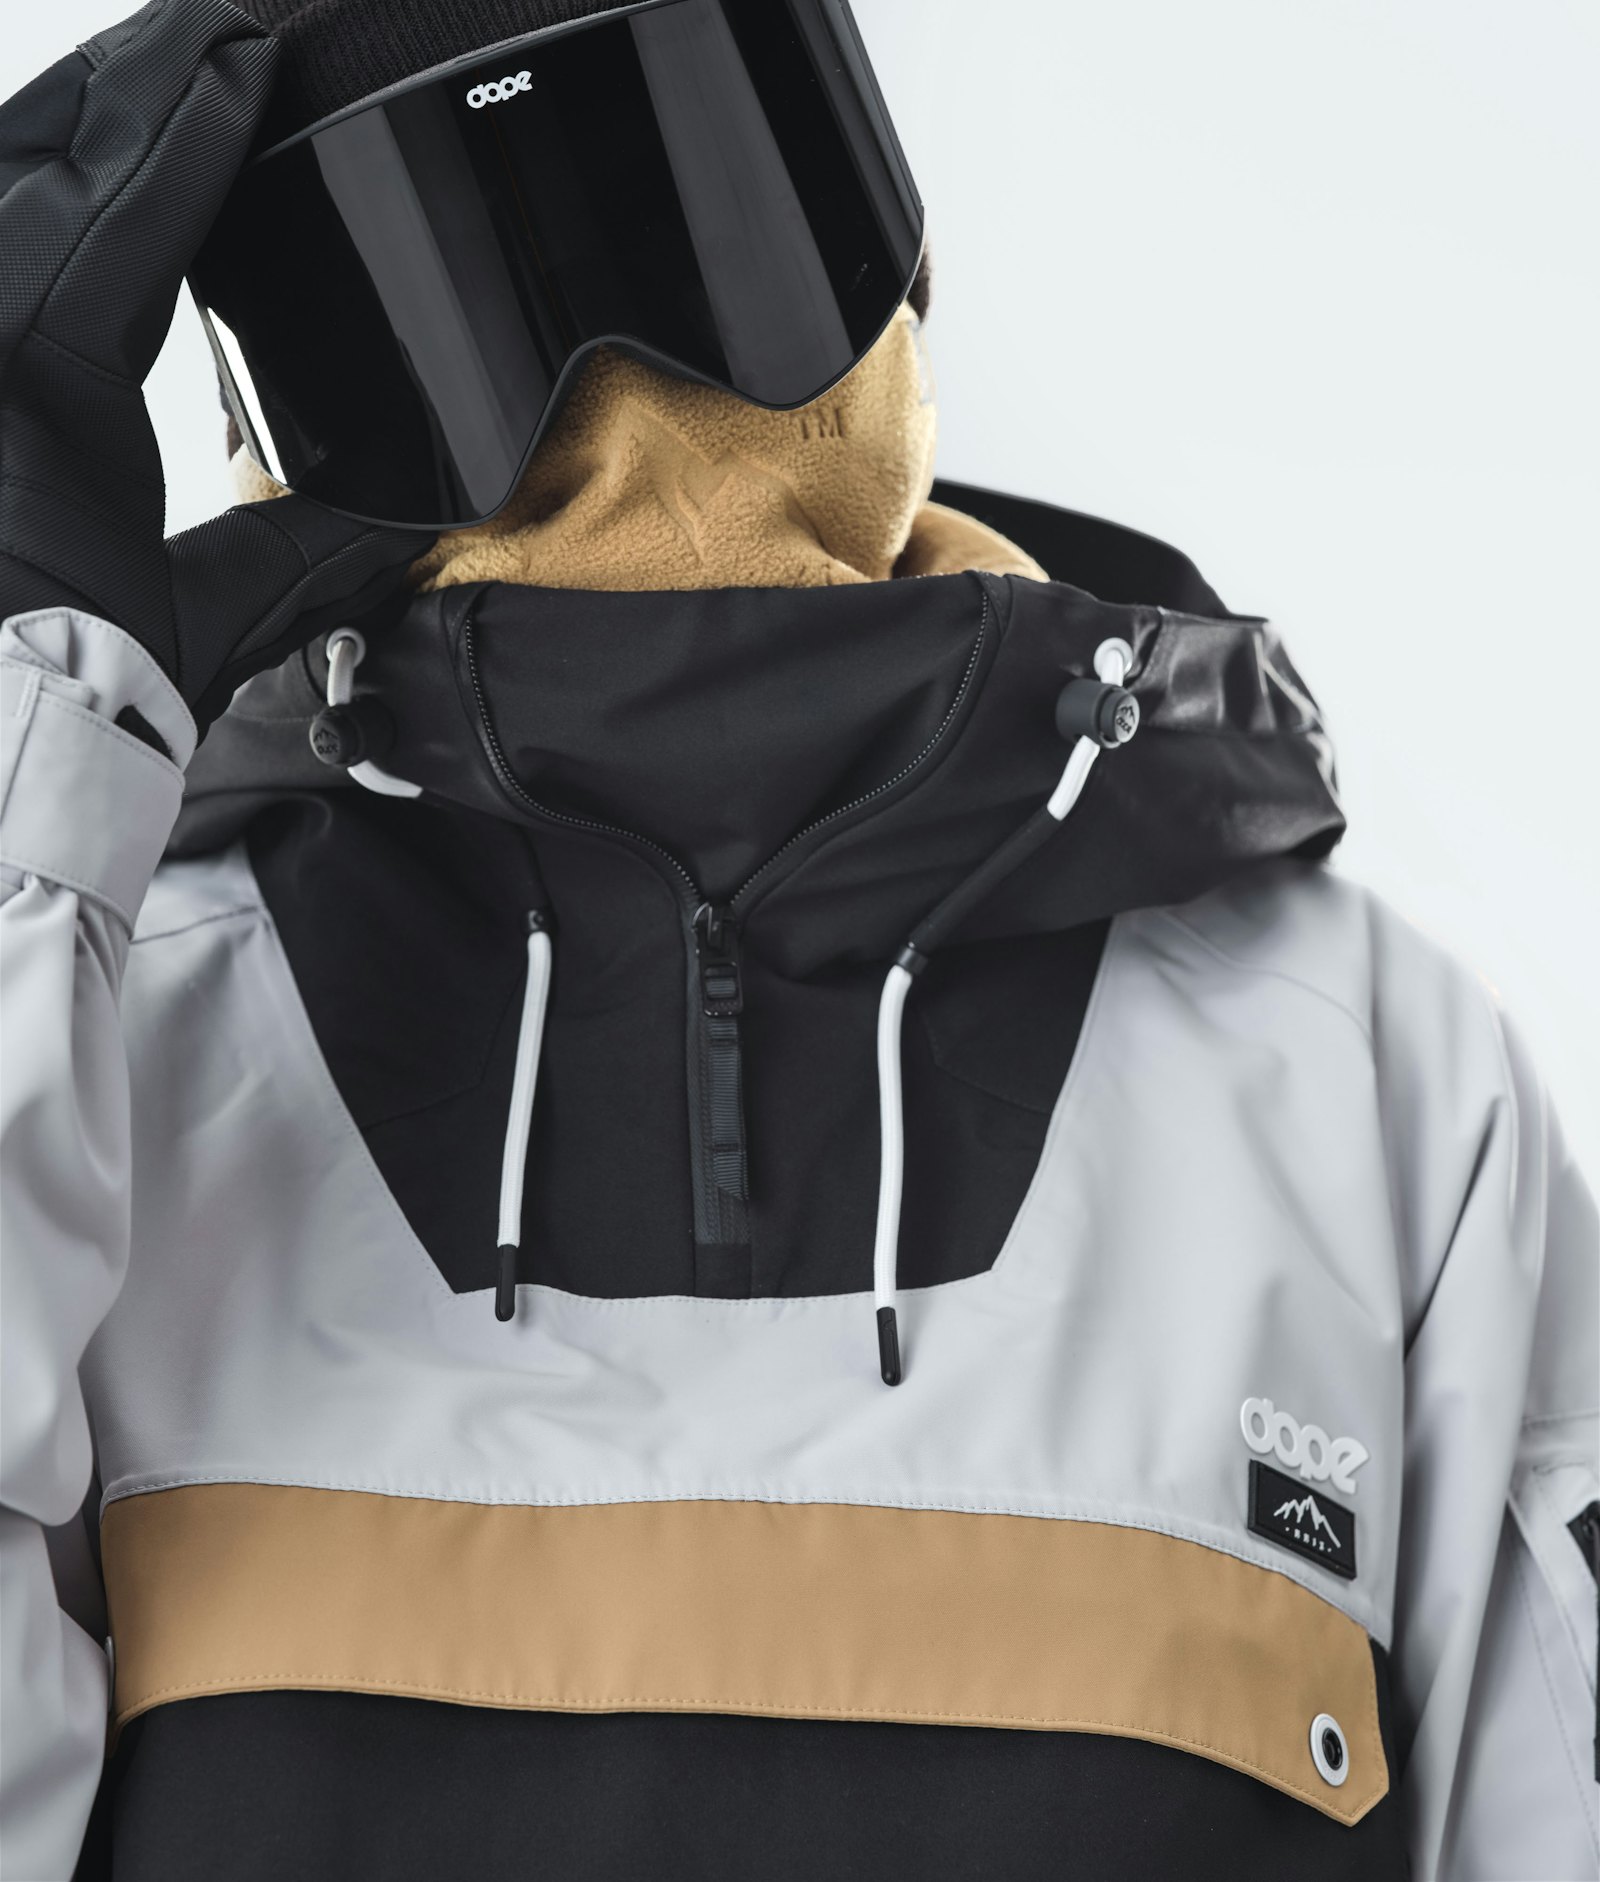 Annok 2020 Snowboardjacke Herren Light Grey/Gold/Black